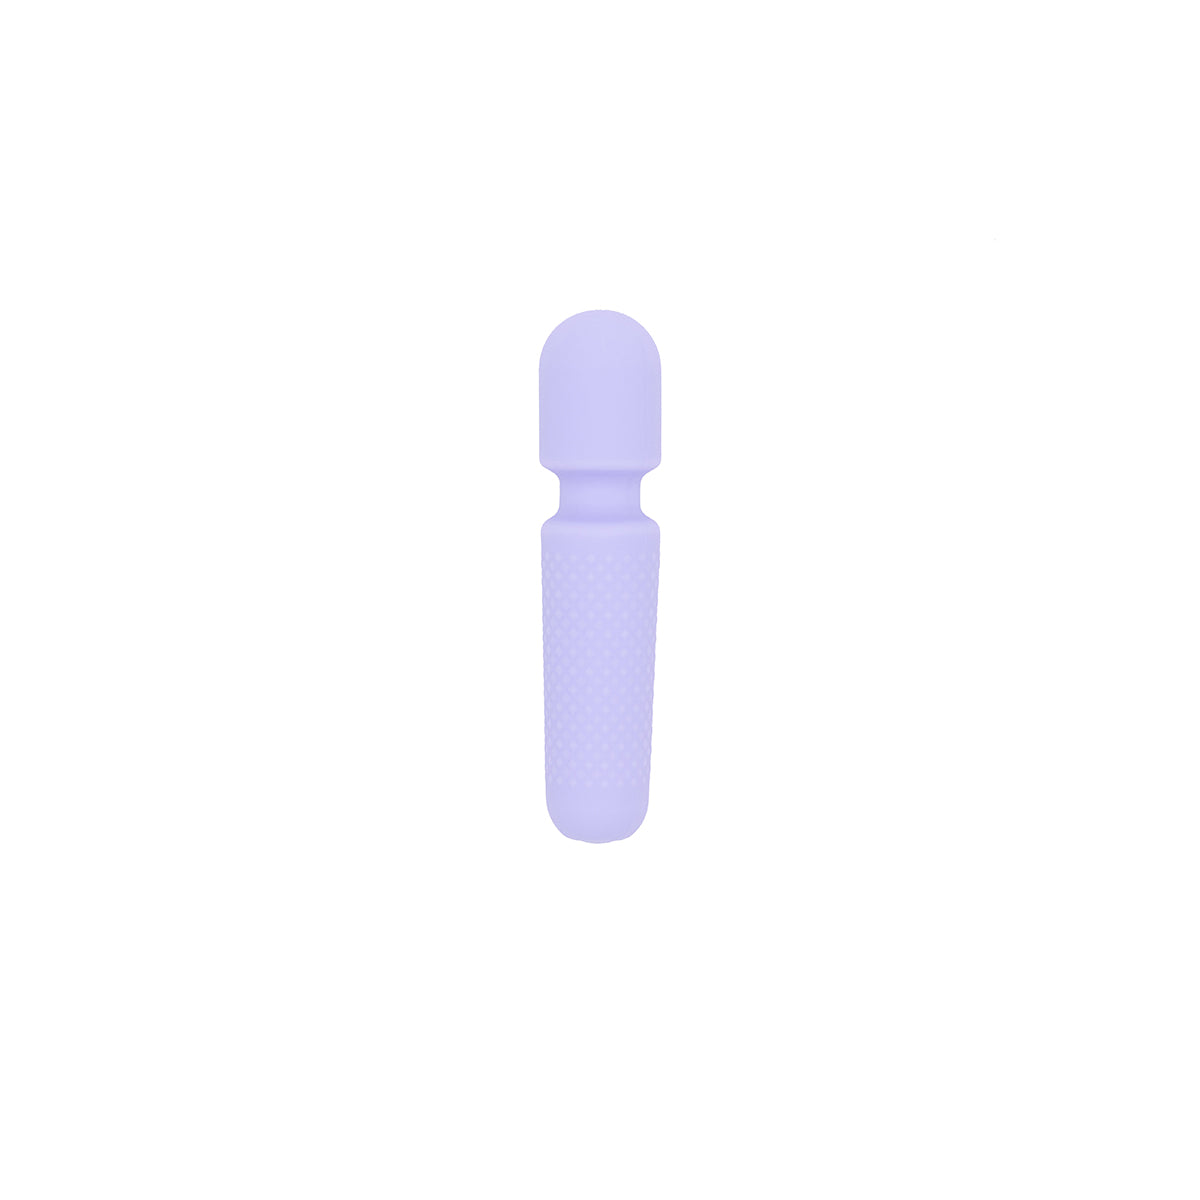 Emojibator Tiny Wand Vibrator